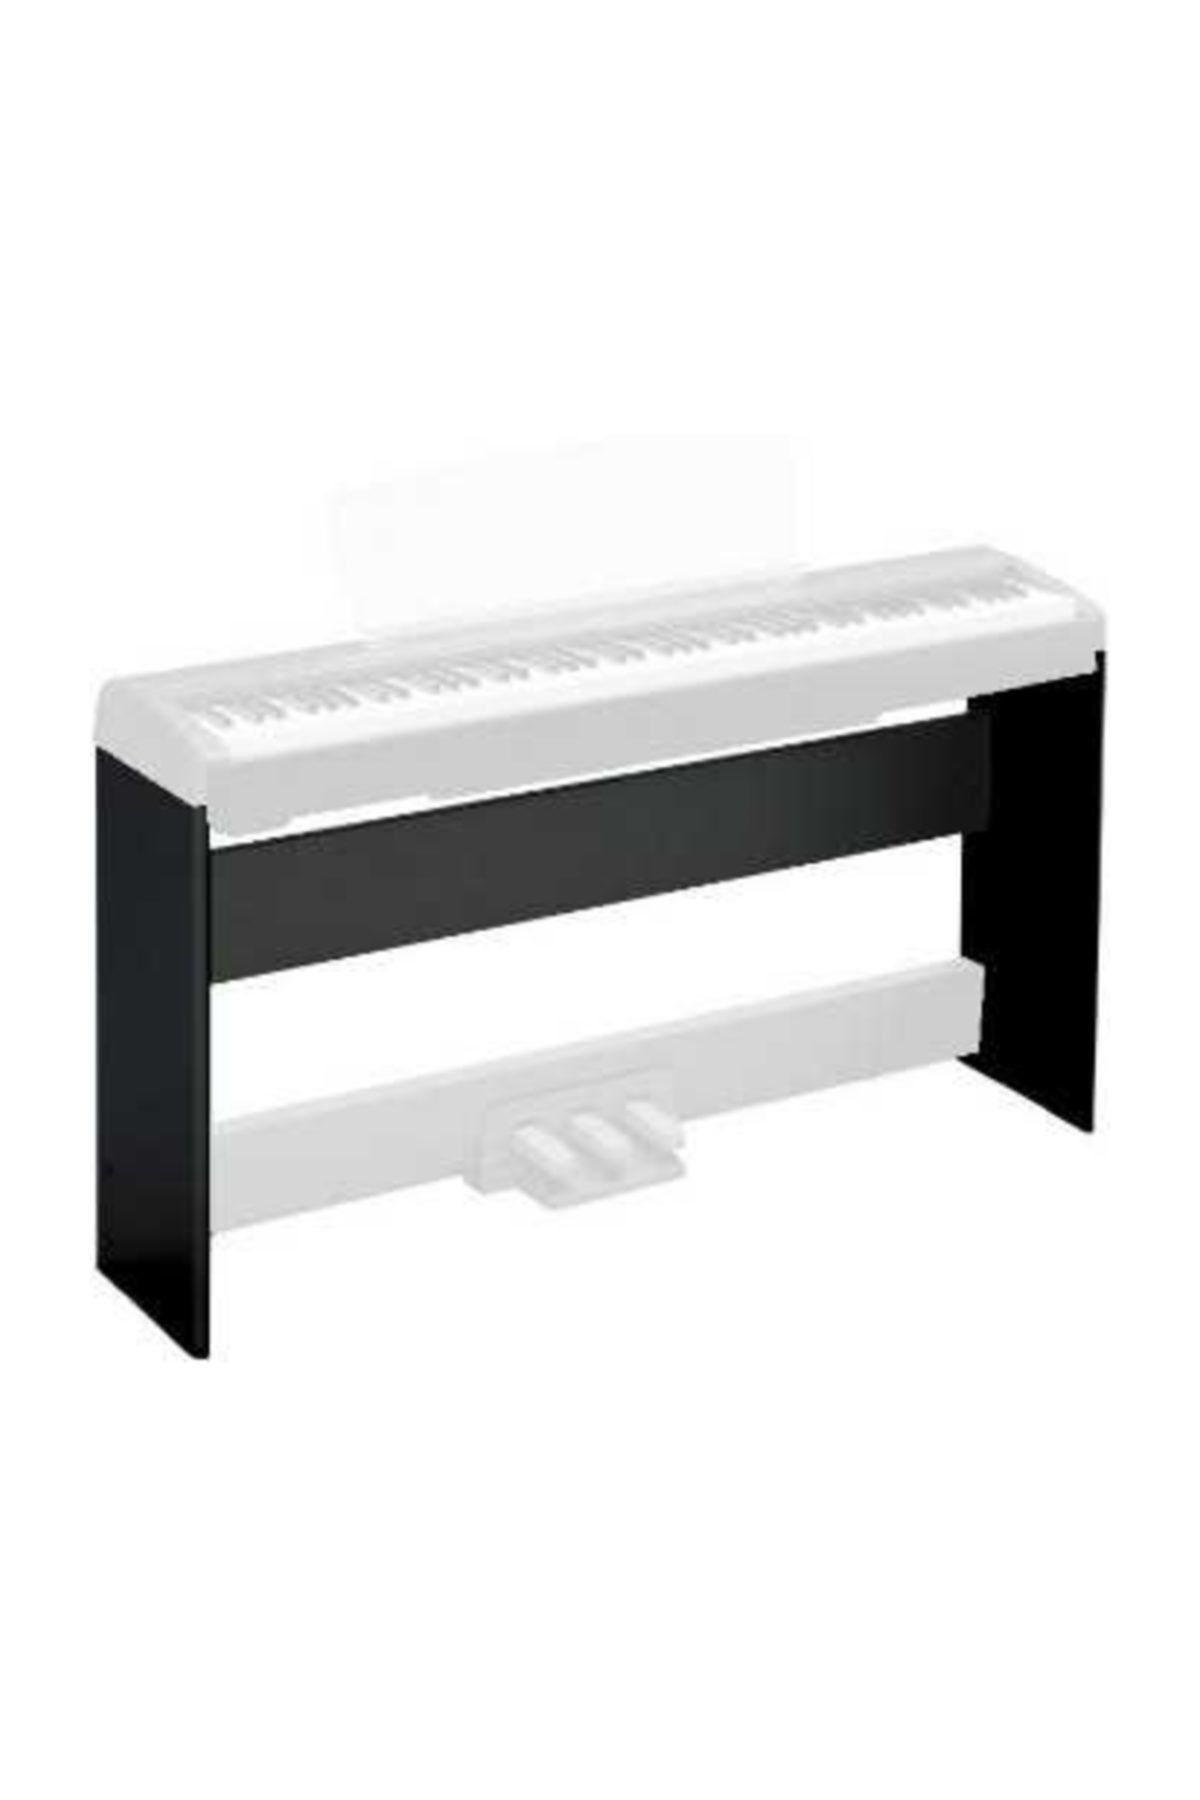 Yamaha Siyah L85b (p45 / P115 Için) Taşınabilir Piyano Standı ()